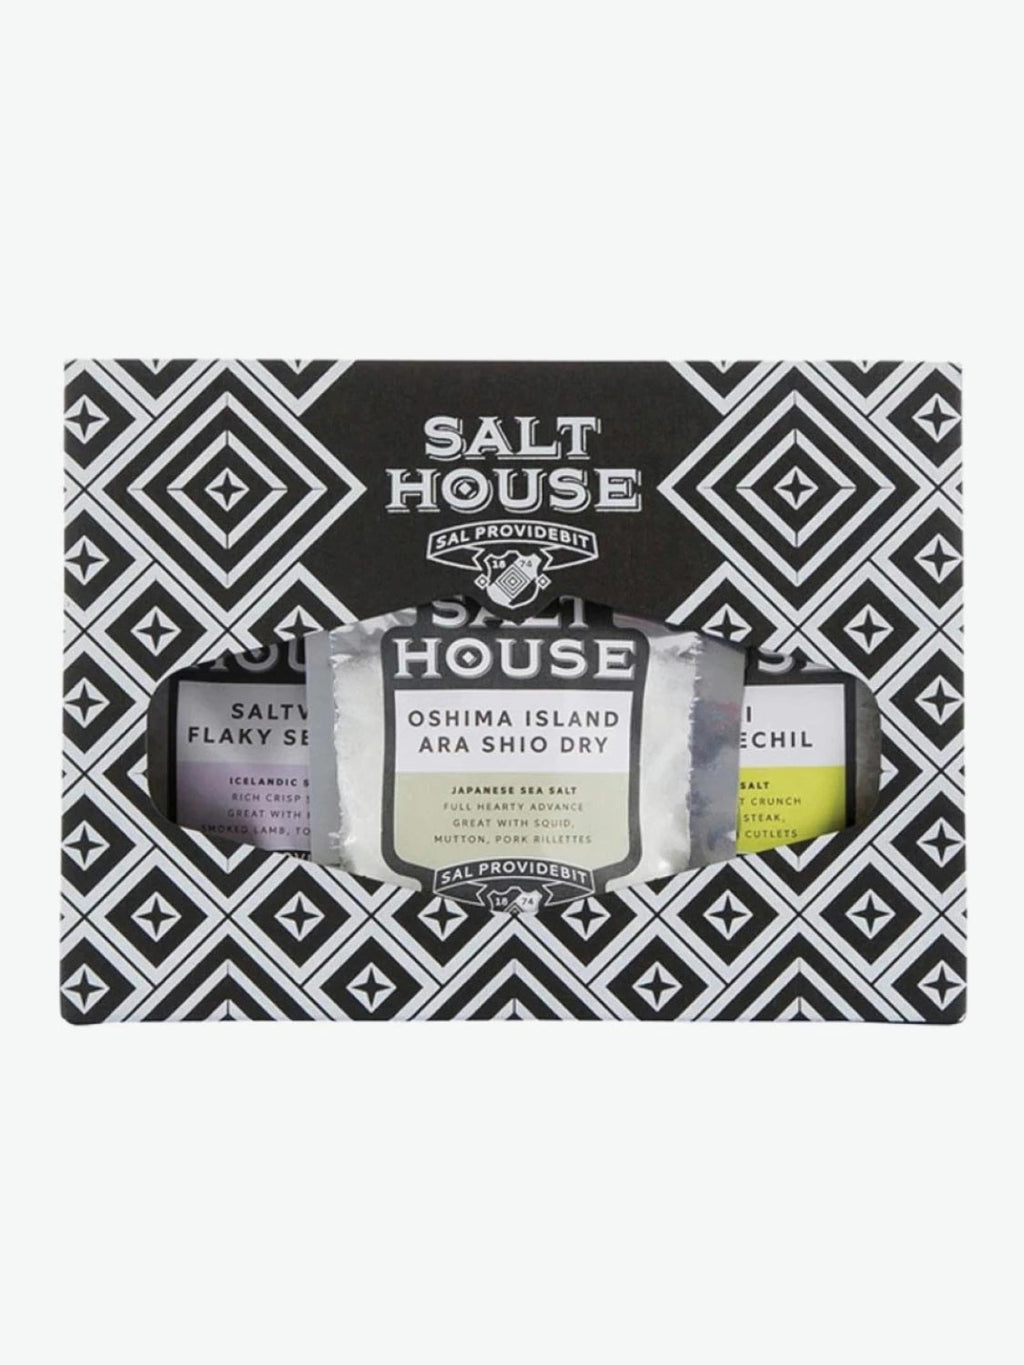 Salthouse Quirky Salt Pack | A